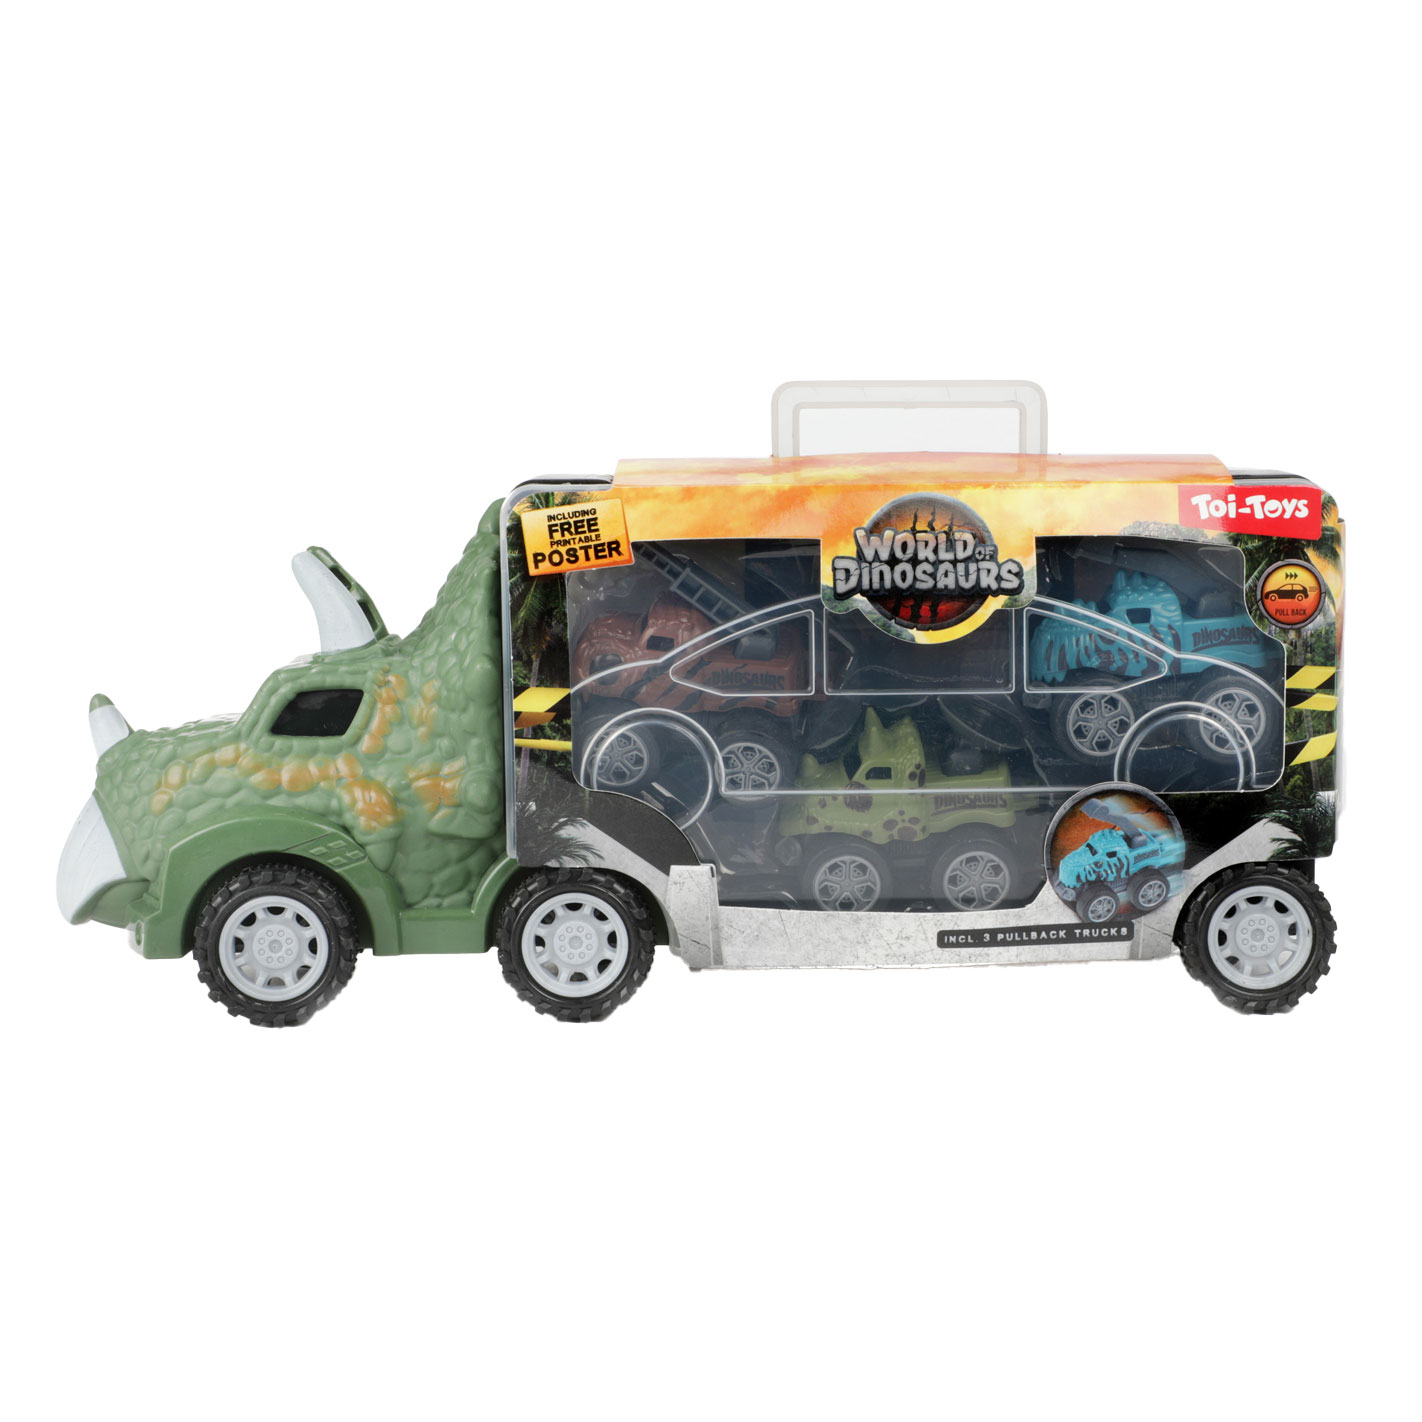 Dinosaur Toys for Kids Dinosaur Carrier Playset 3 Pull Back Car